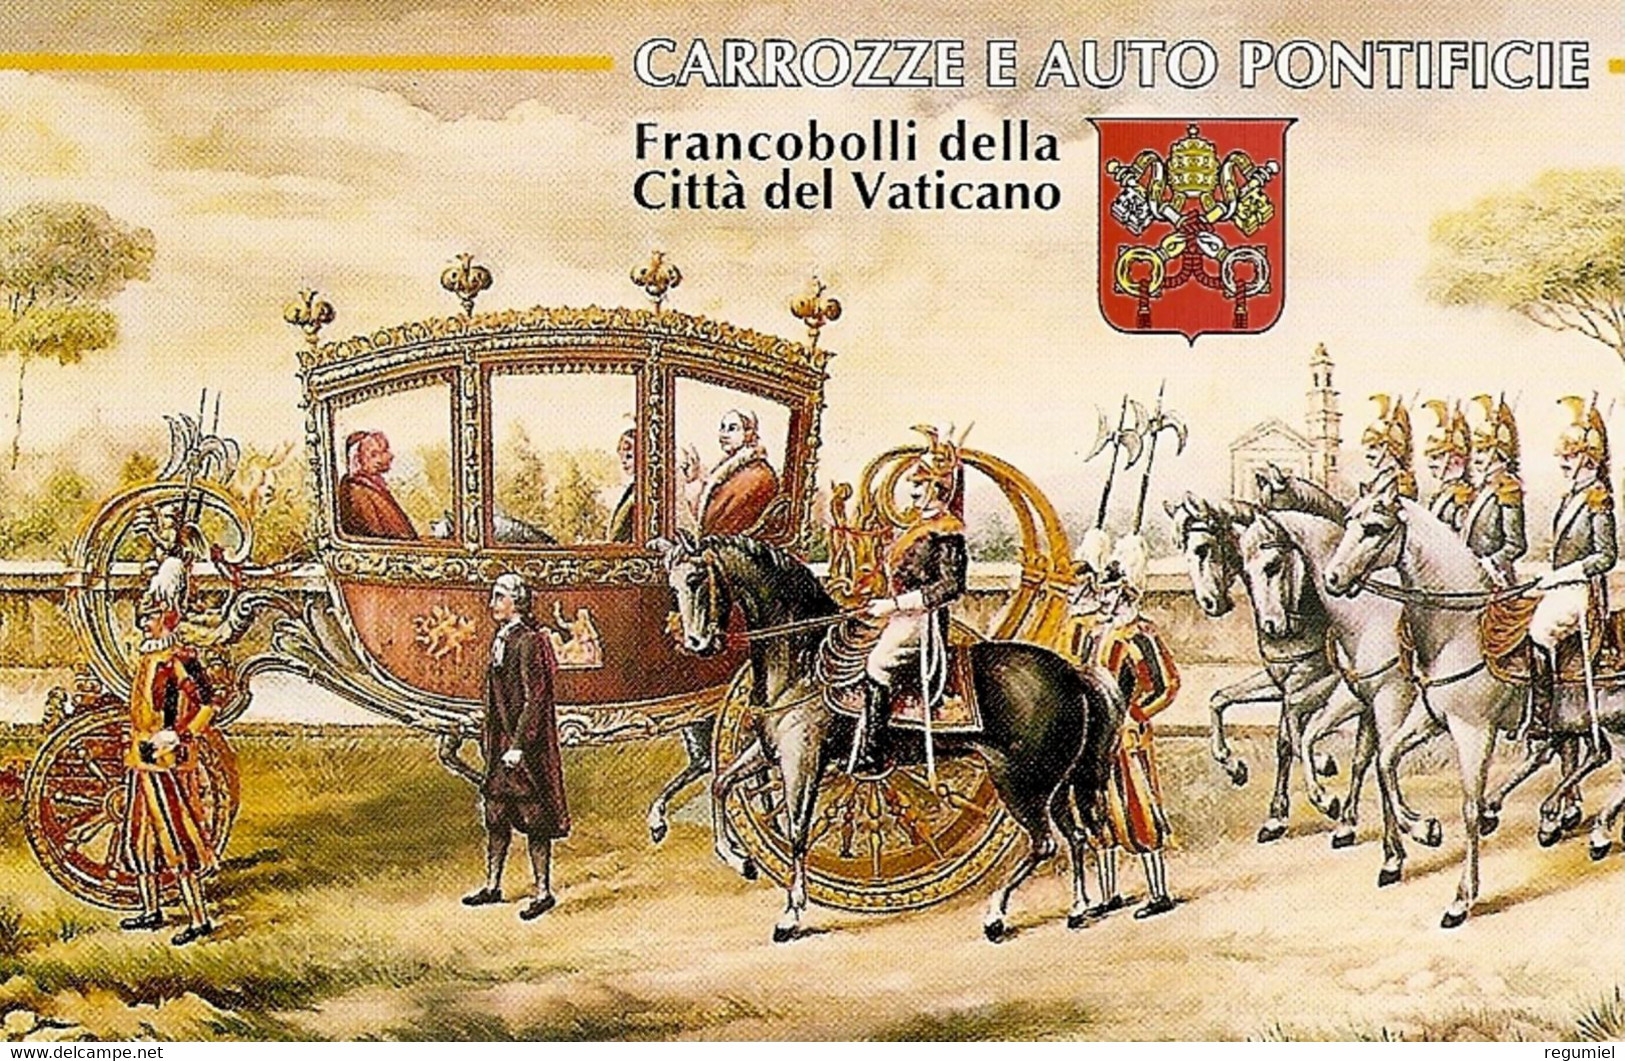 Vaticano Carnet 1060 ** MNH. 1997 - Booklets